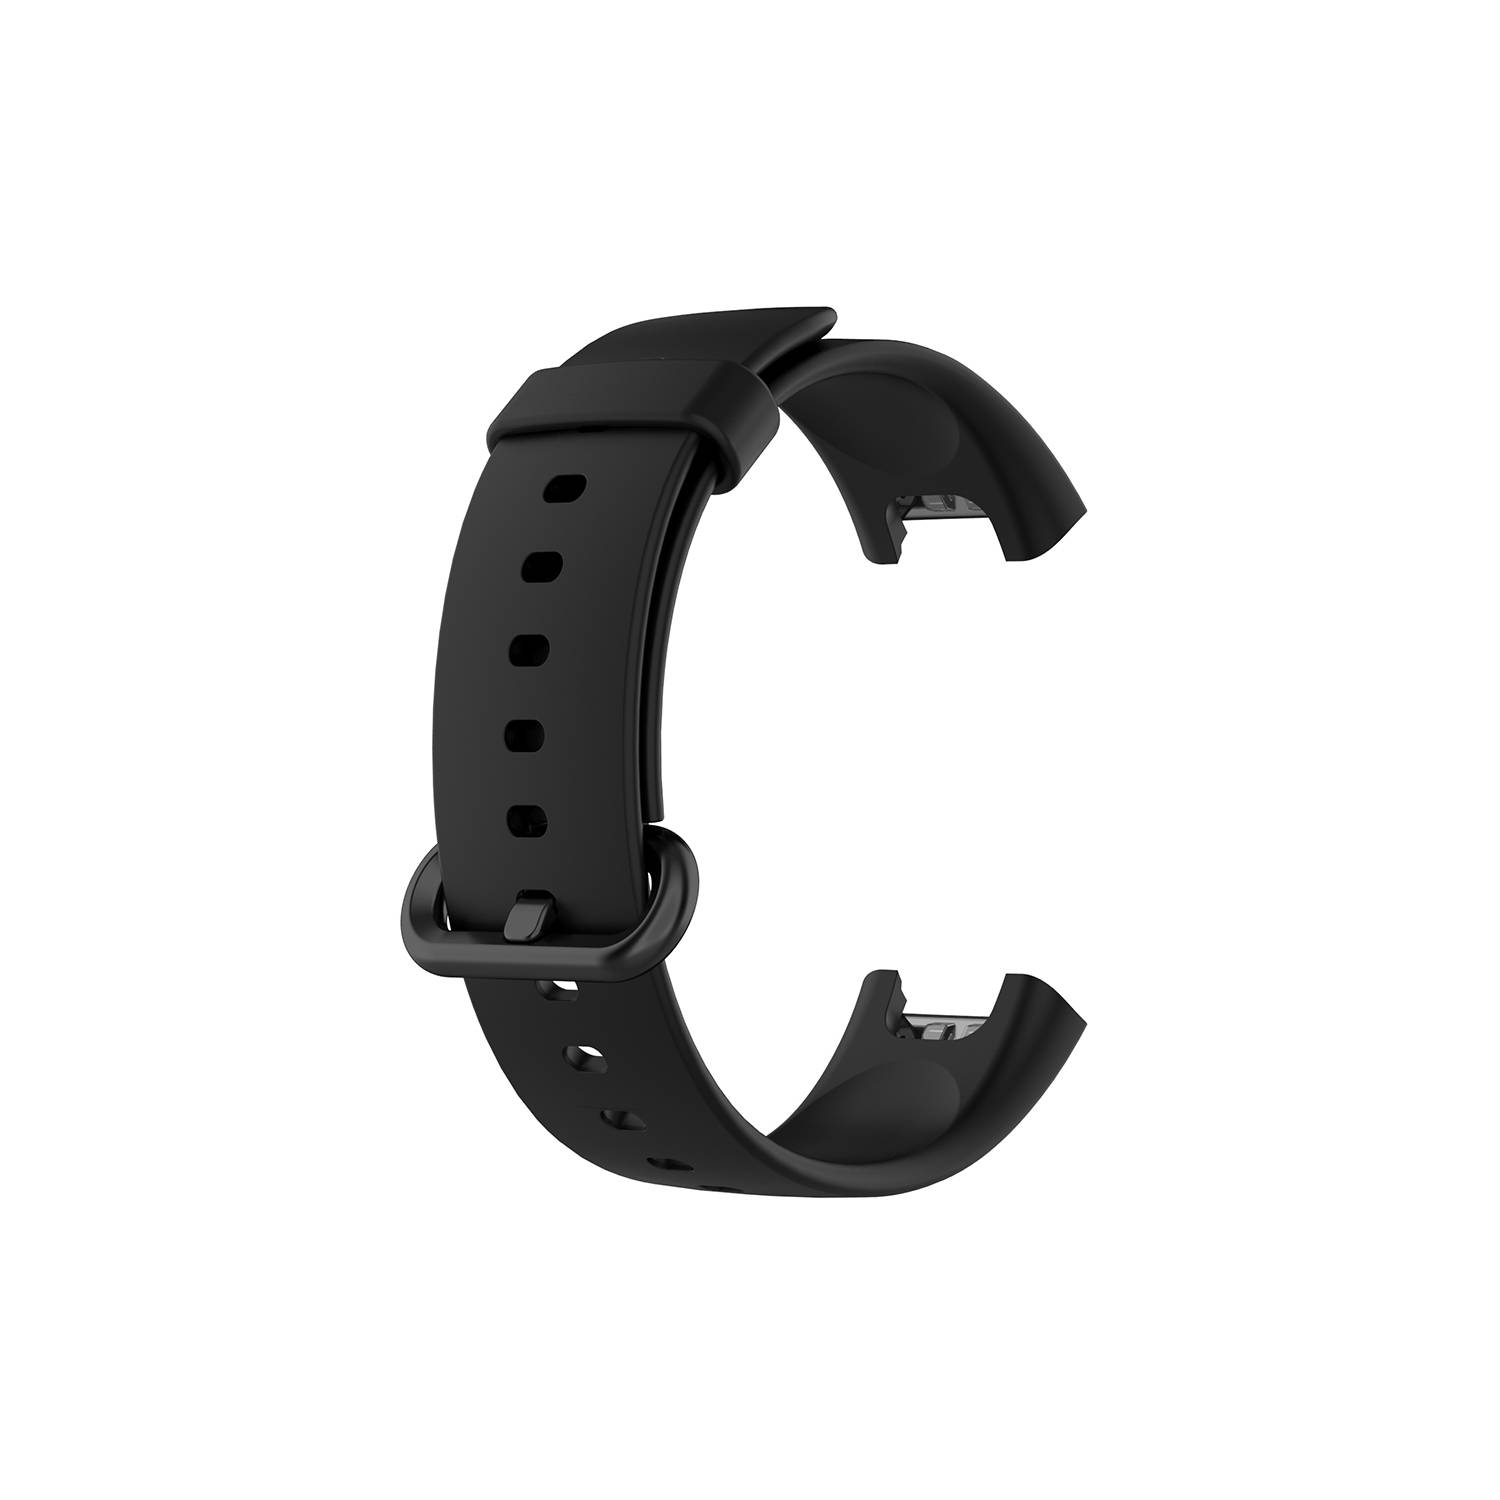 Correa Reloj Silicona para Xiaomi Redmi Watch 2 Lite